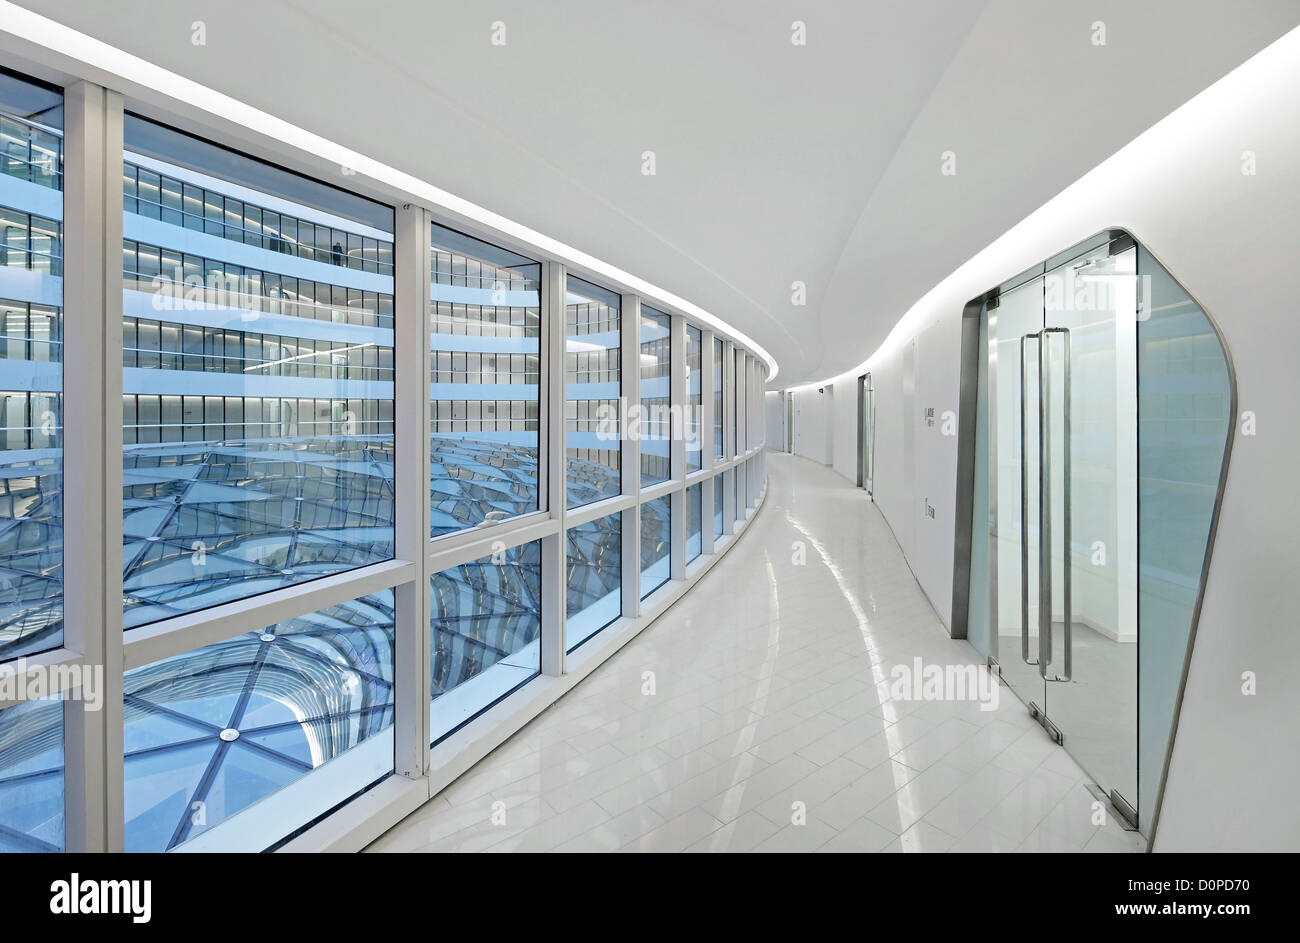 Galaxy-Soho, Peking, China. Architekt: Zaha Hadid Architects, 2012. Blick durch leere verglasten Korridor. Stockfoto